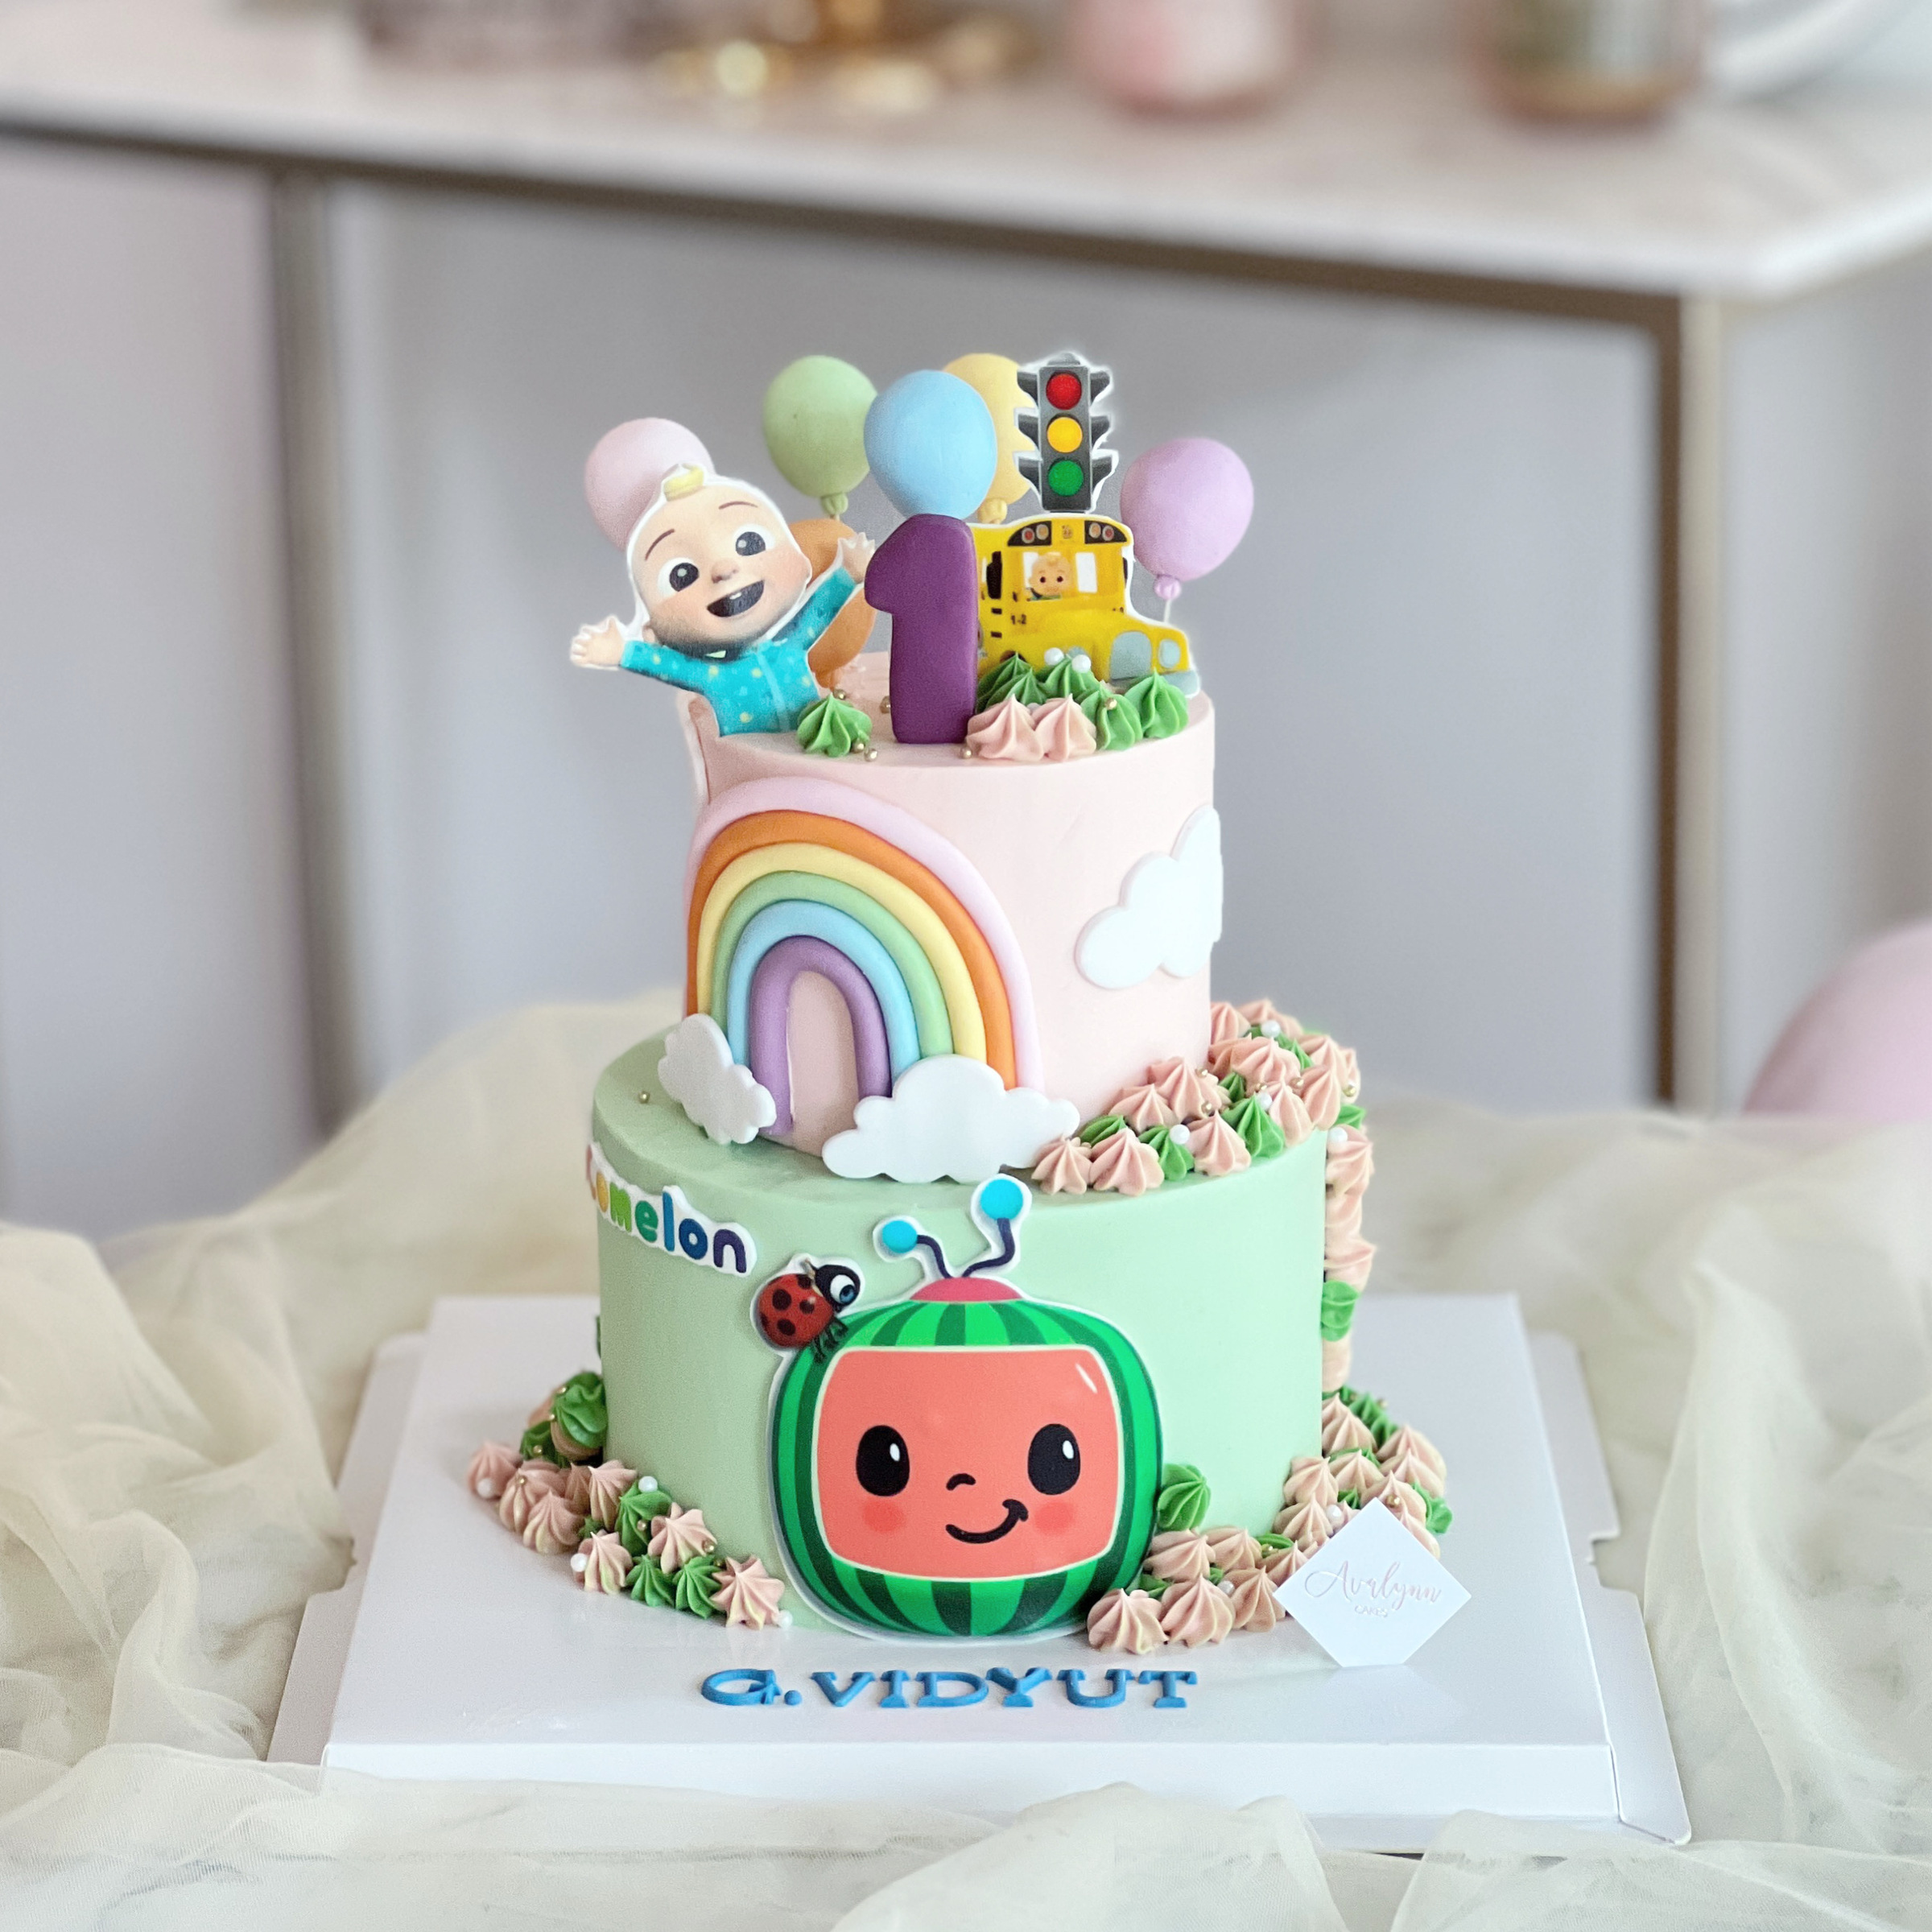 Kinder Joy Theme Custom Cake | Fondant Cake | Home Delivery